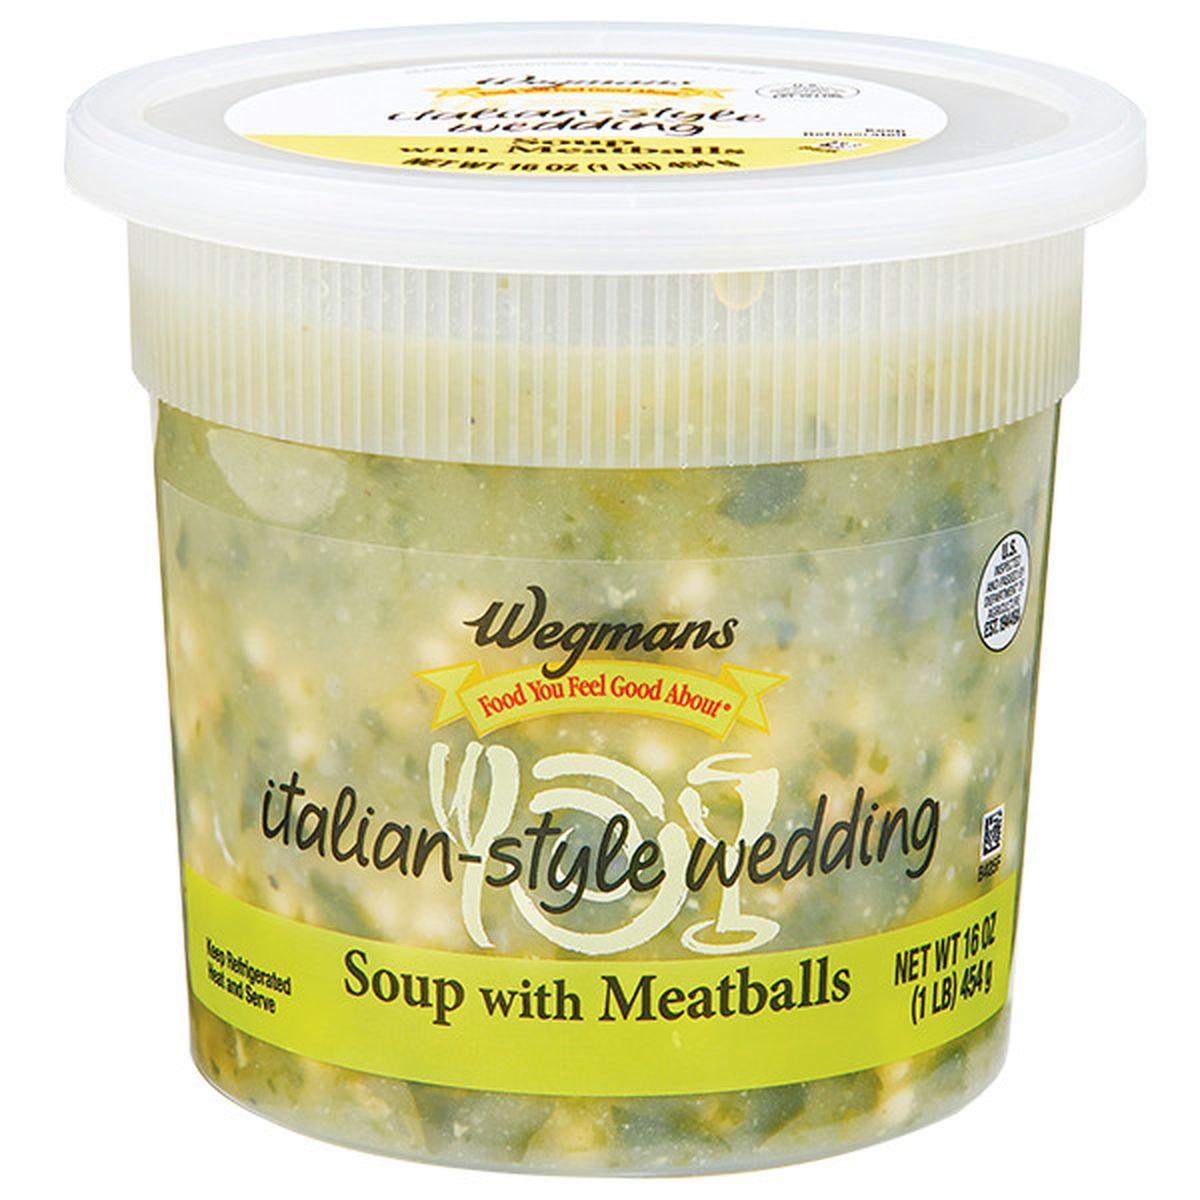 Calories in Wegmans Italian-Style Wedding Soup with Meatballs